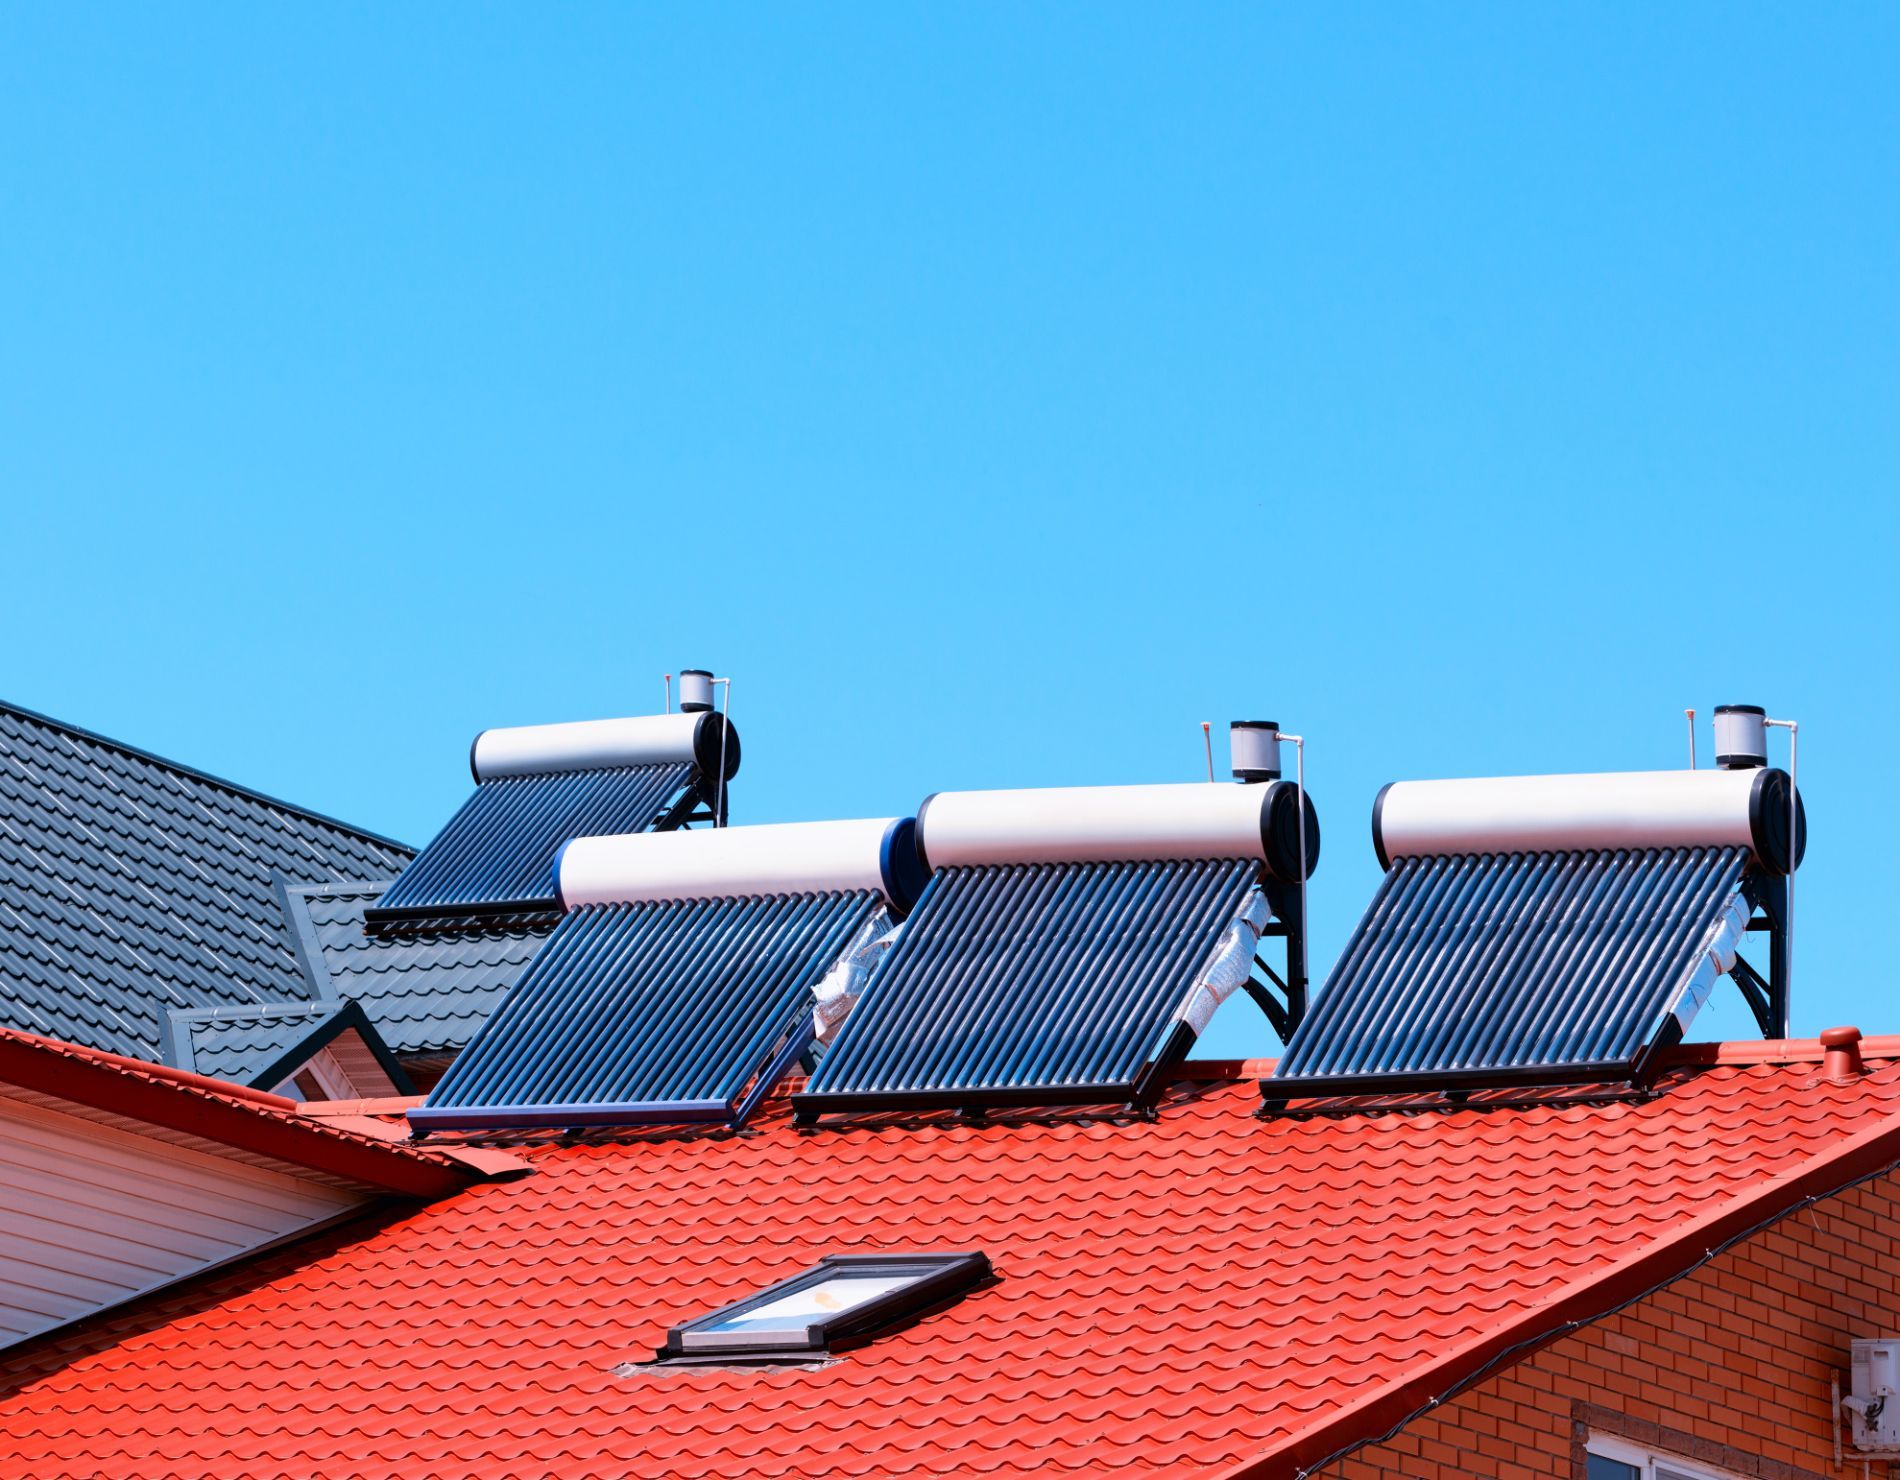 Residential solar heating panels